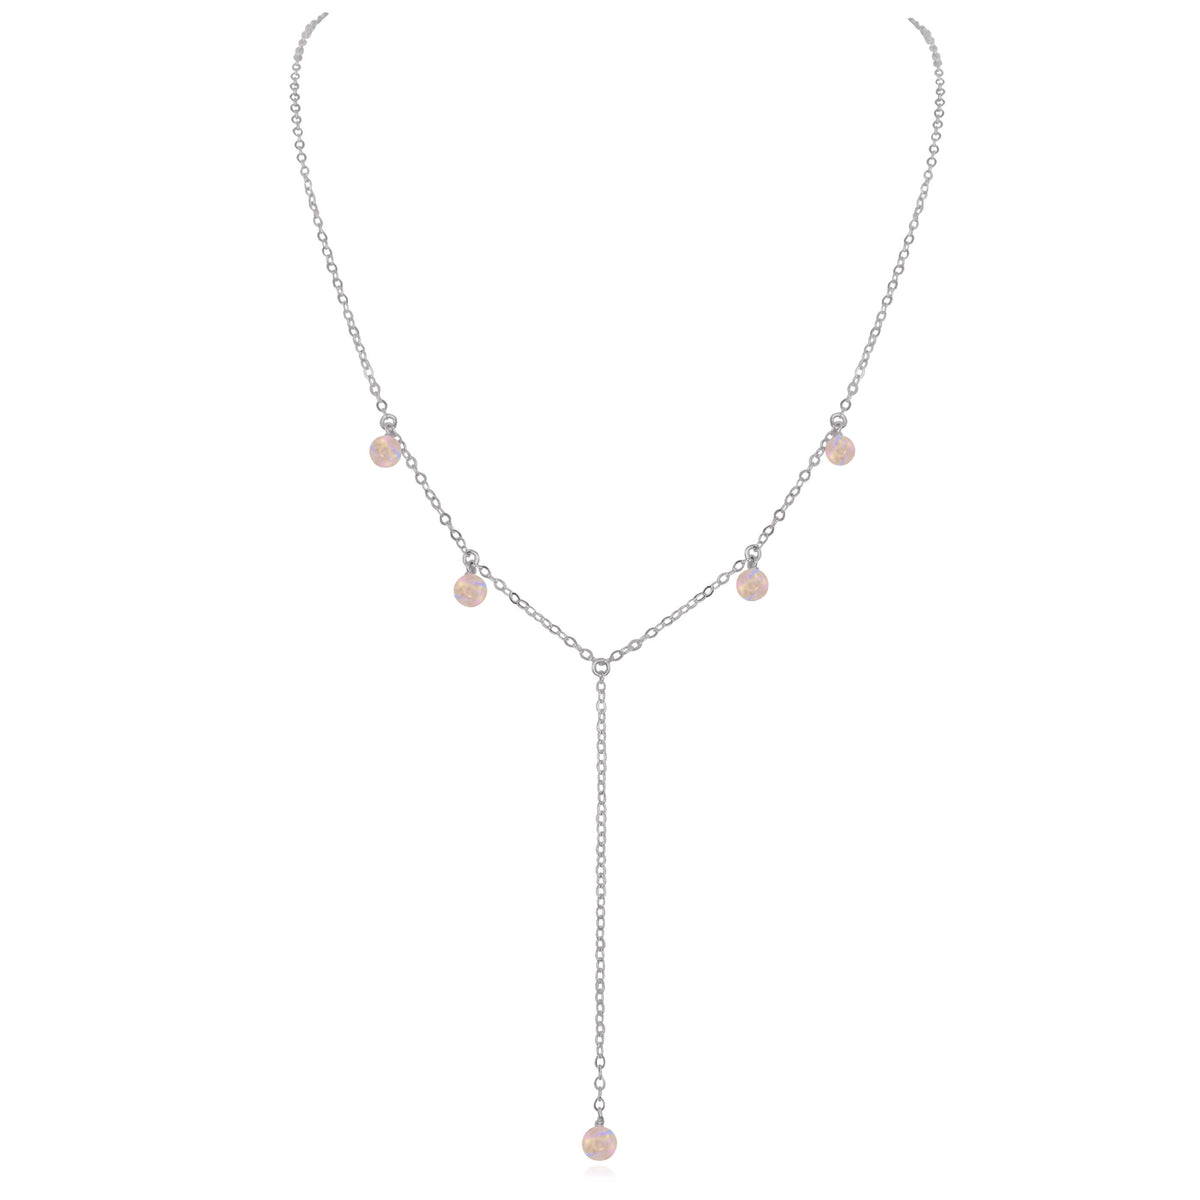 Boho Y Necklace - Rainbow Moonstone - Stainless Steel - Luna Tide Handmade Jewellery